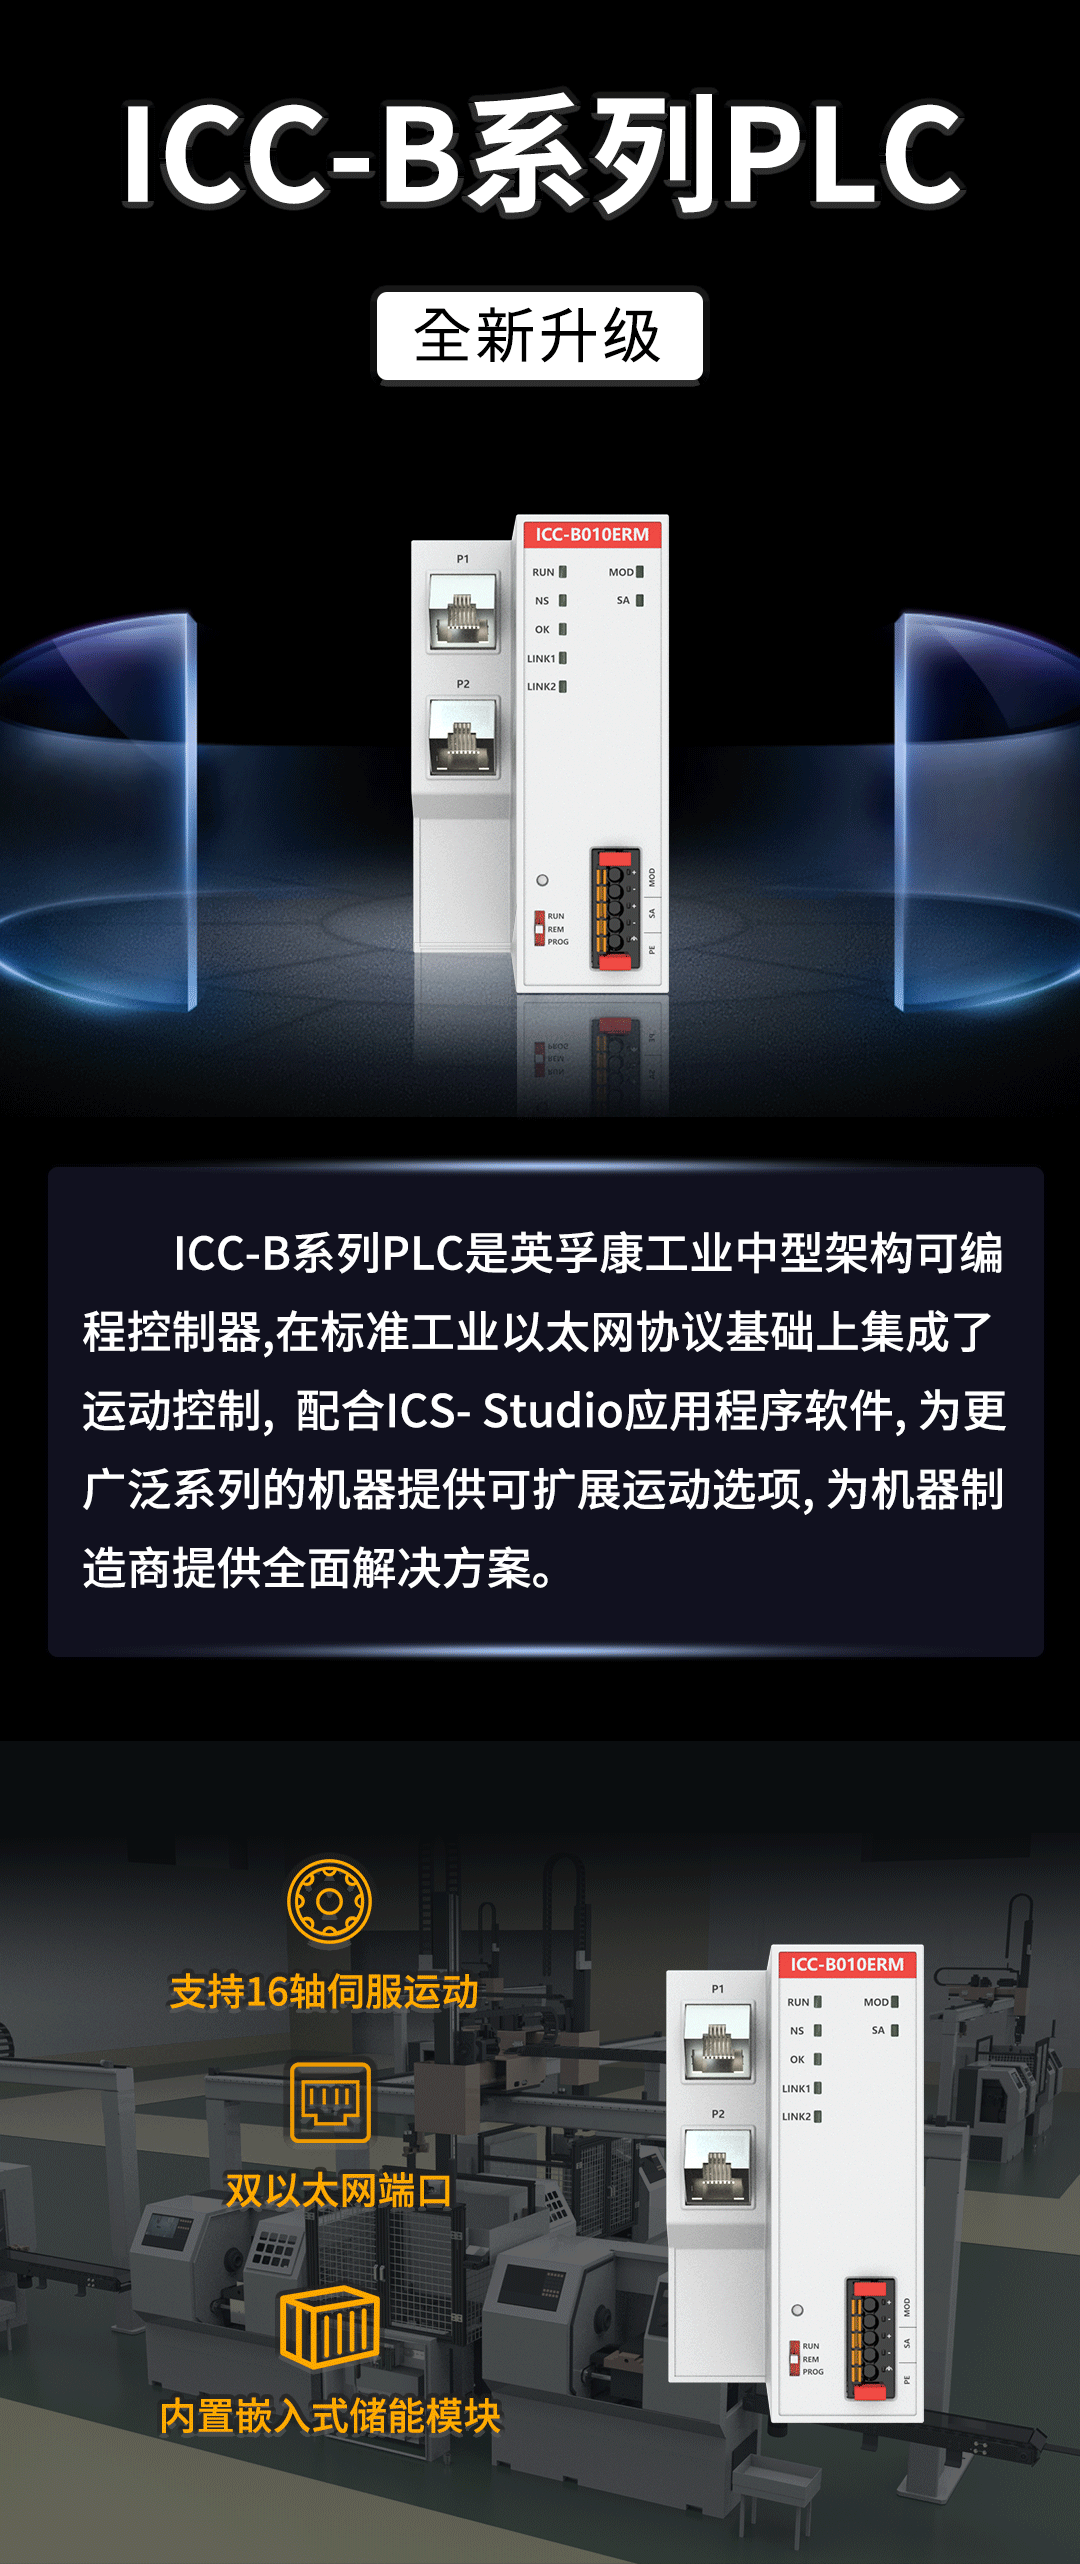 ICC-B系列PLC全新升级丨更小、更强、更全